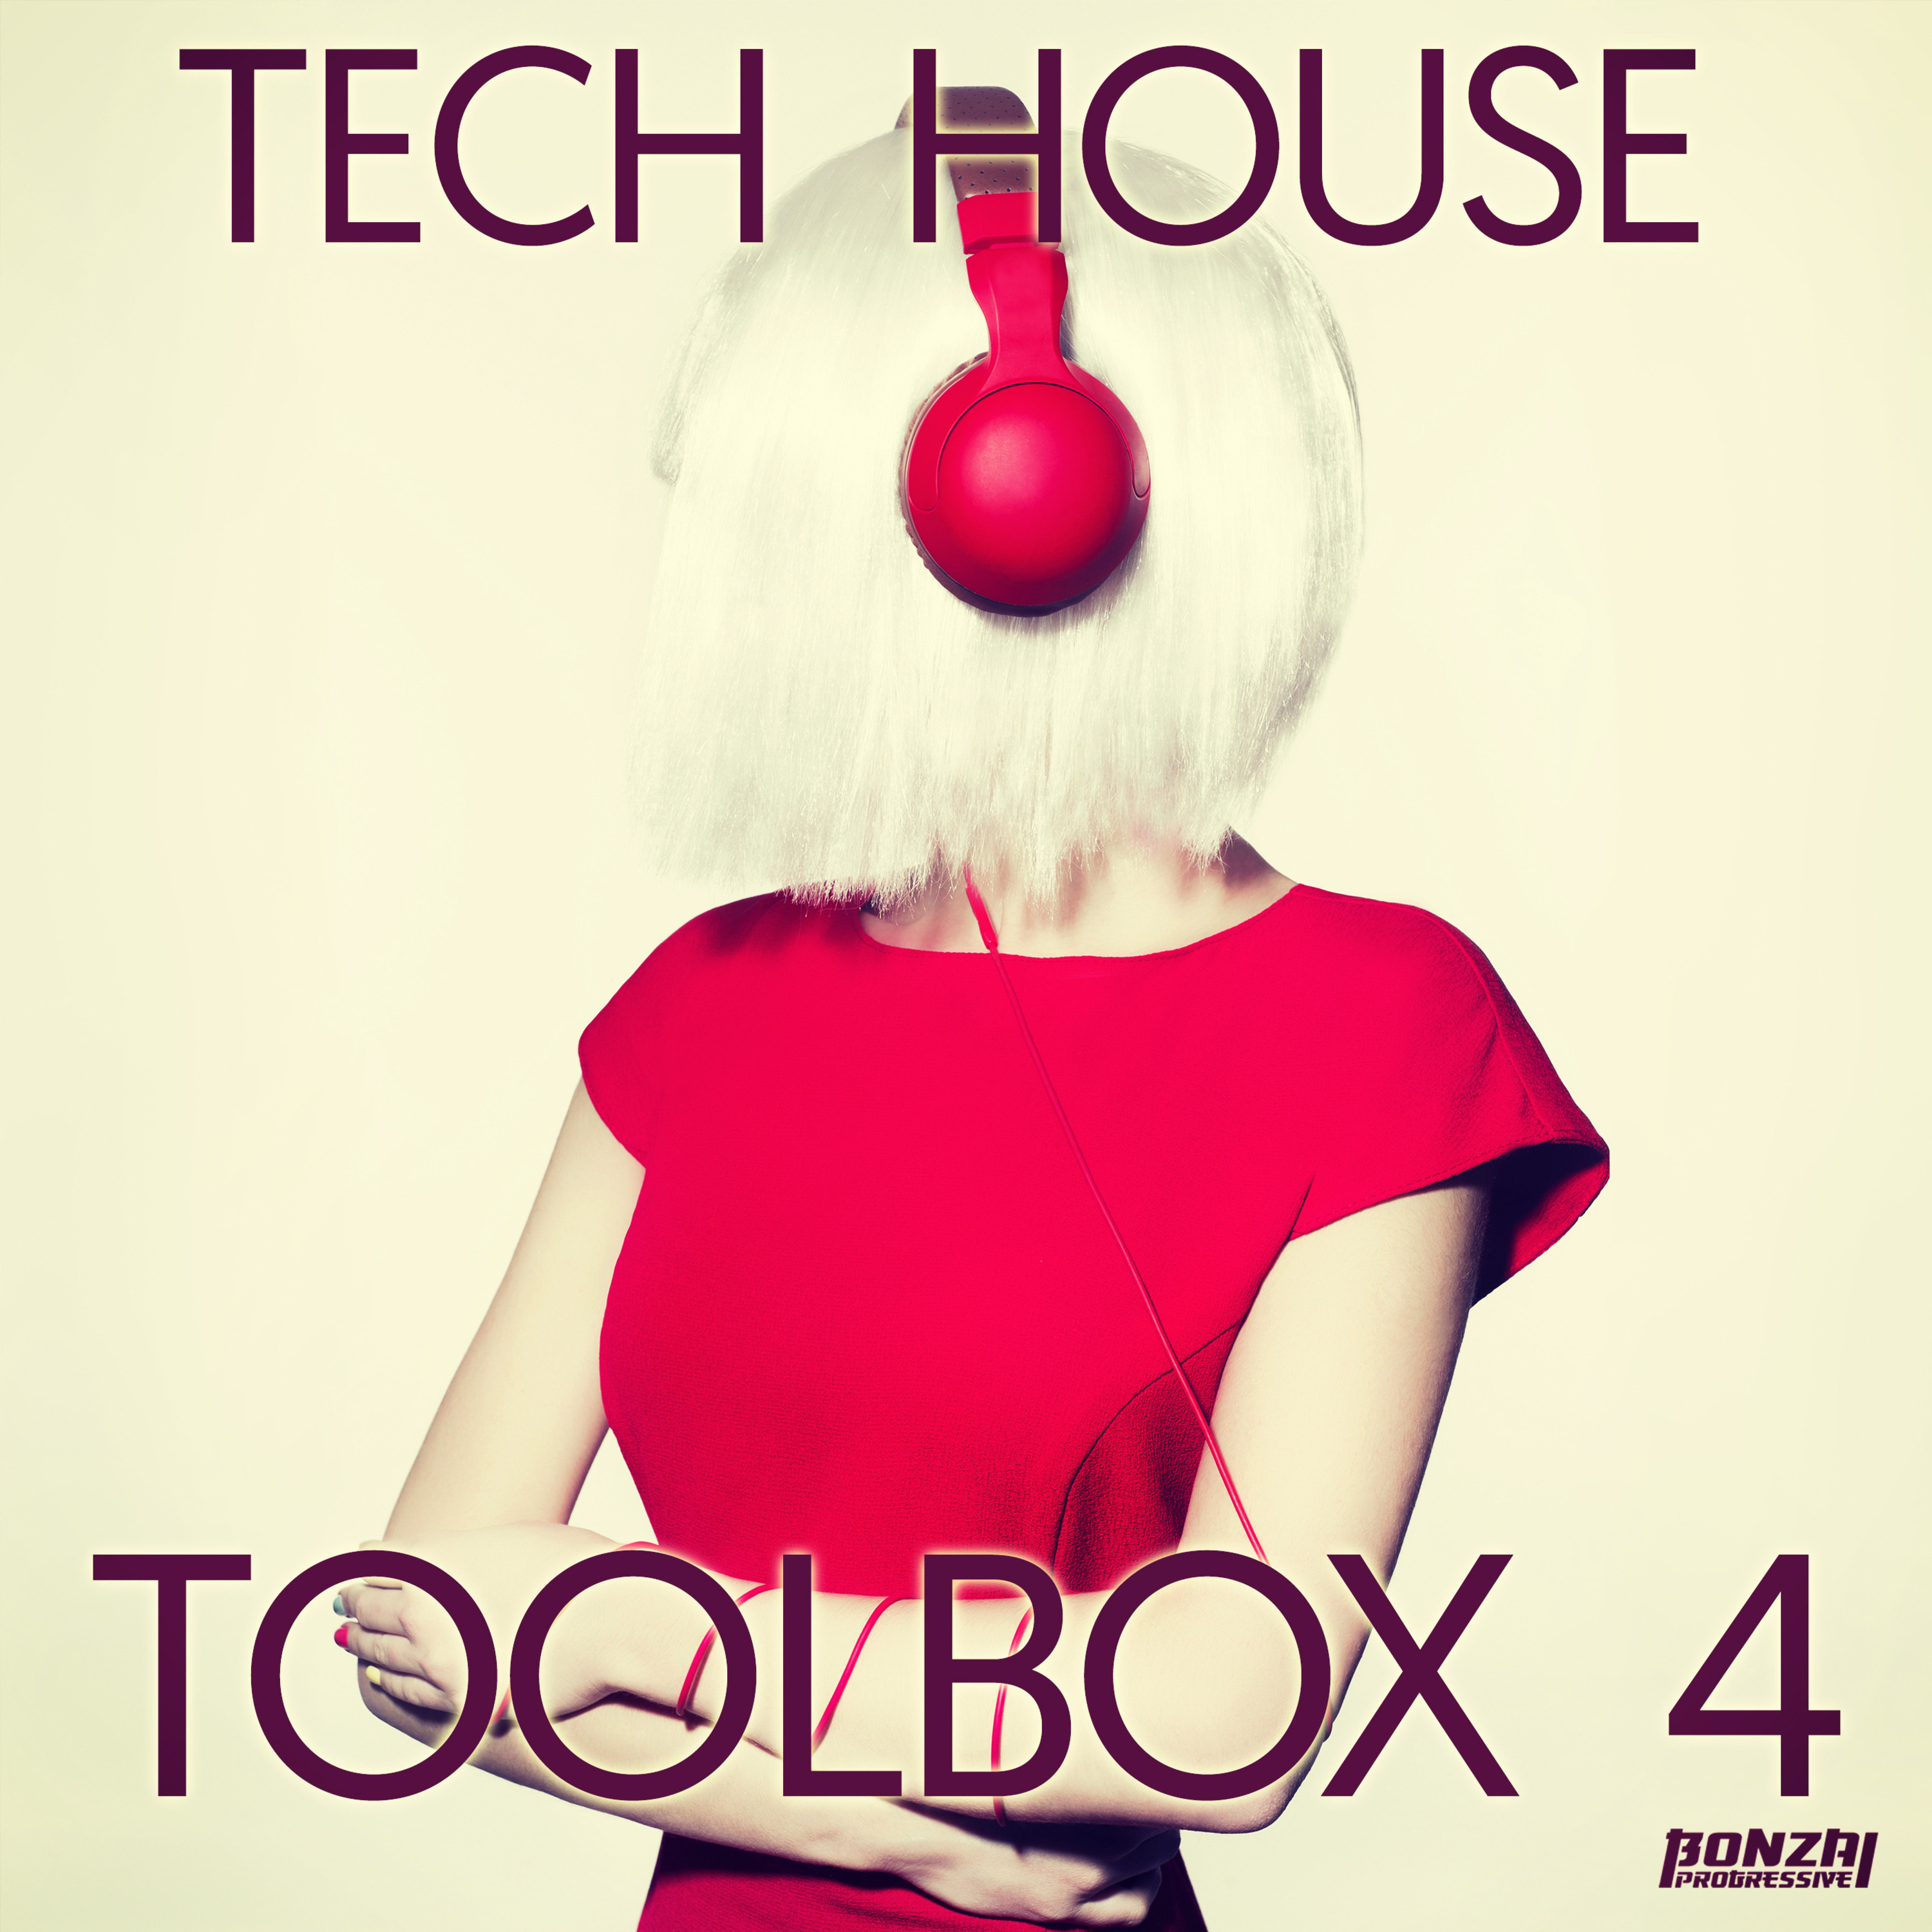 Tech House Toolbox 4